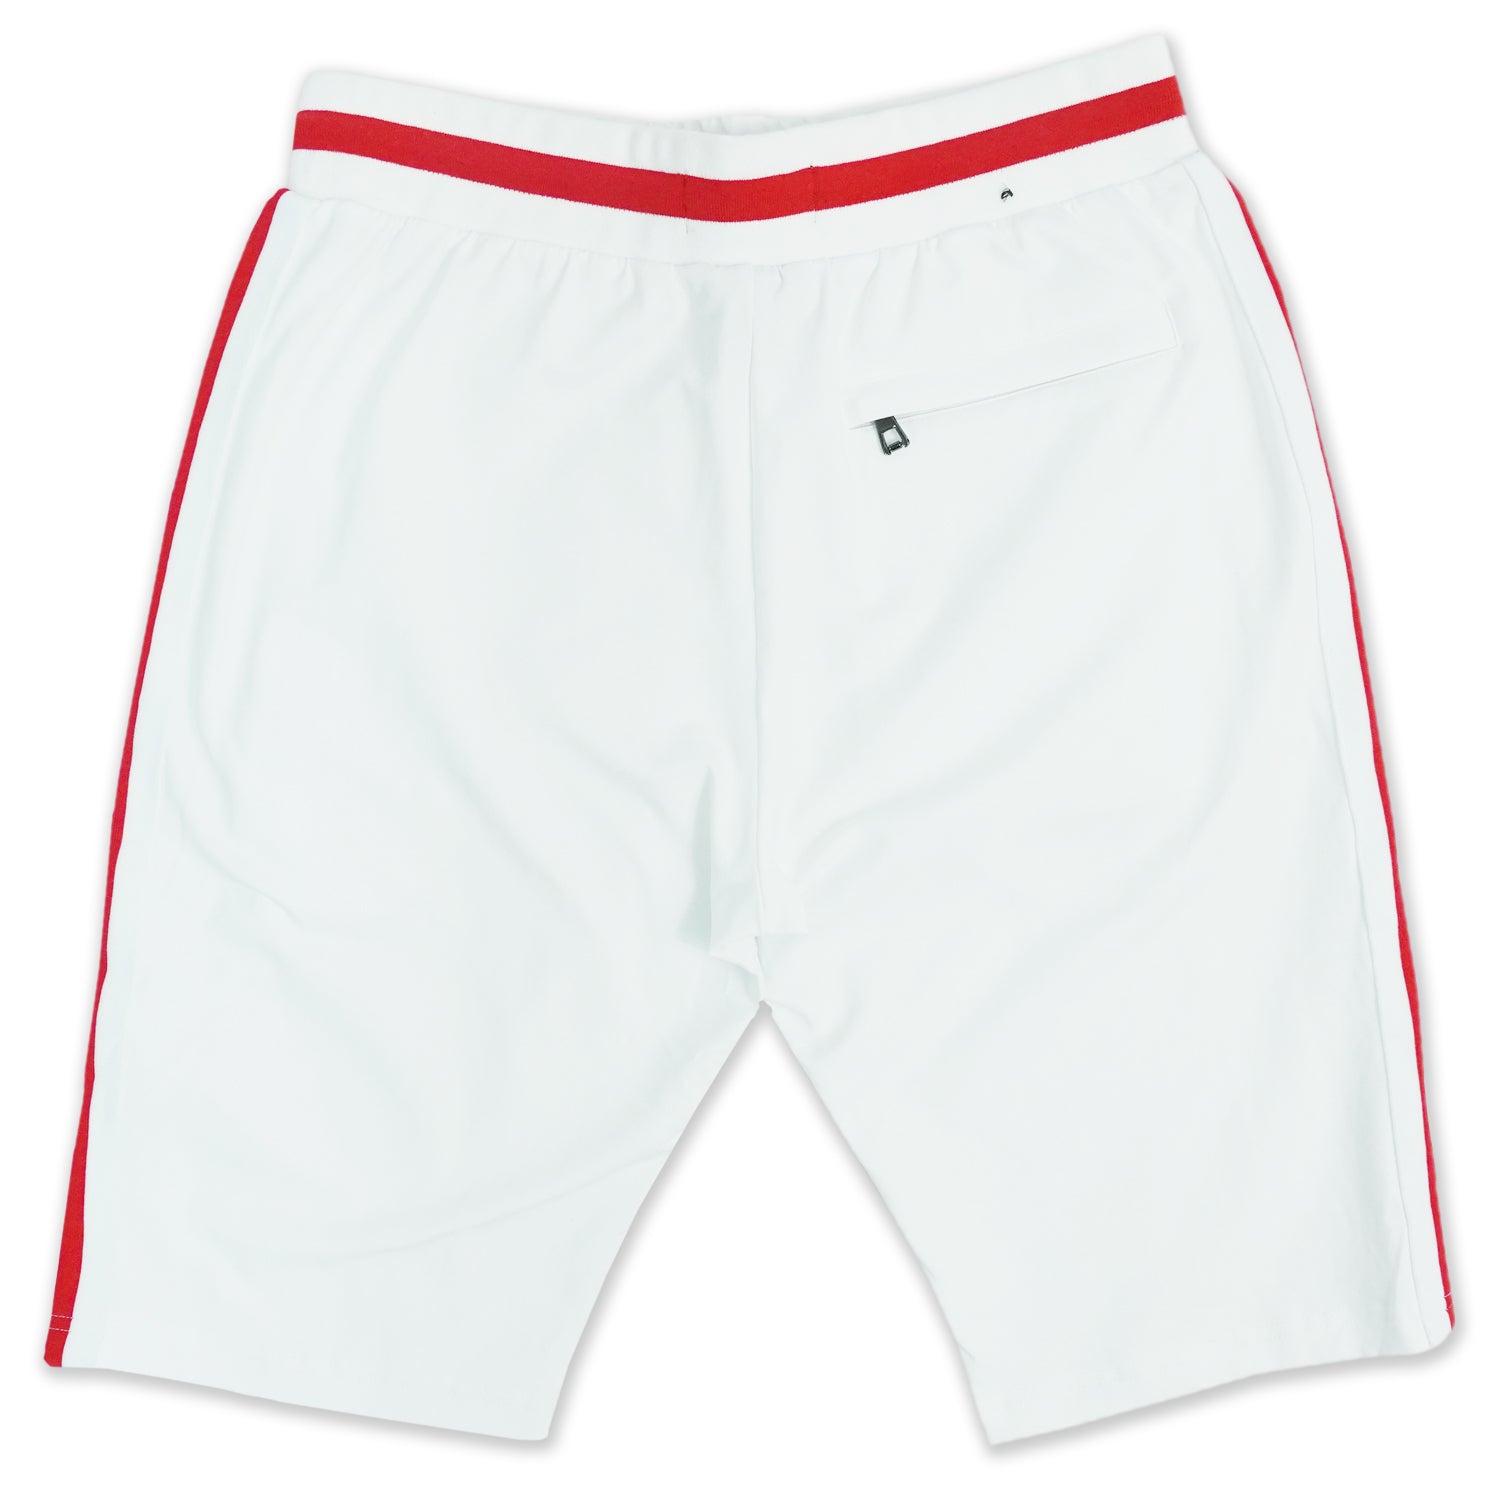 M600 Knit Shorts - White